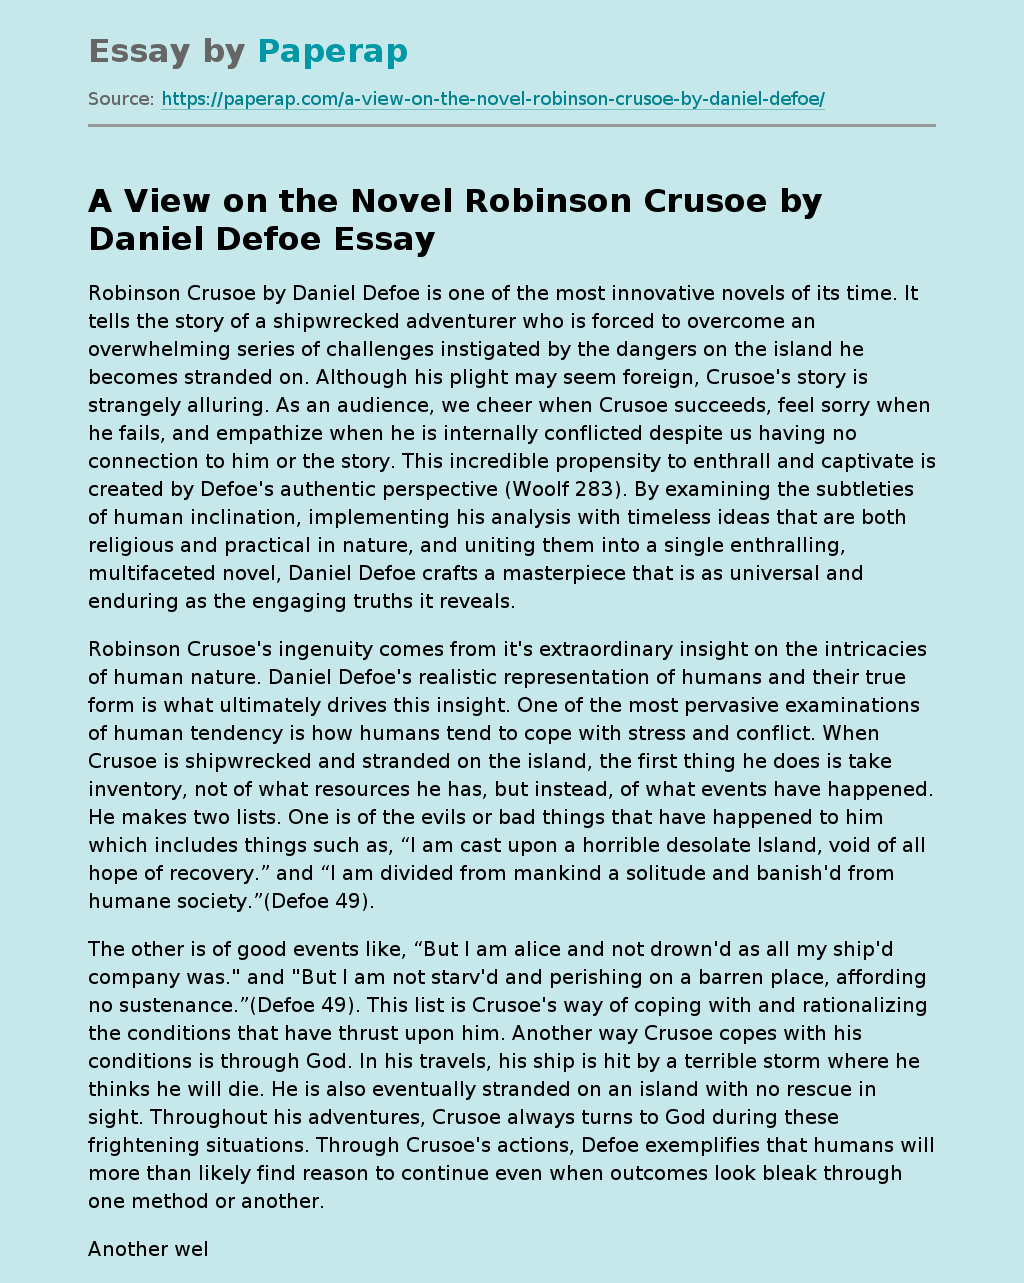 A View on the Novel Robinson Crusoe by Daniel Defoe